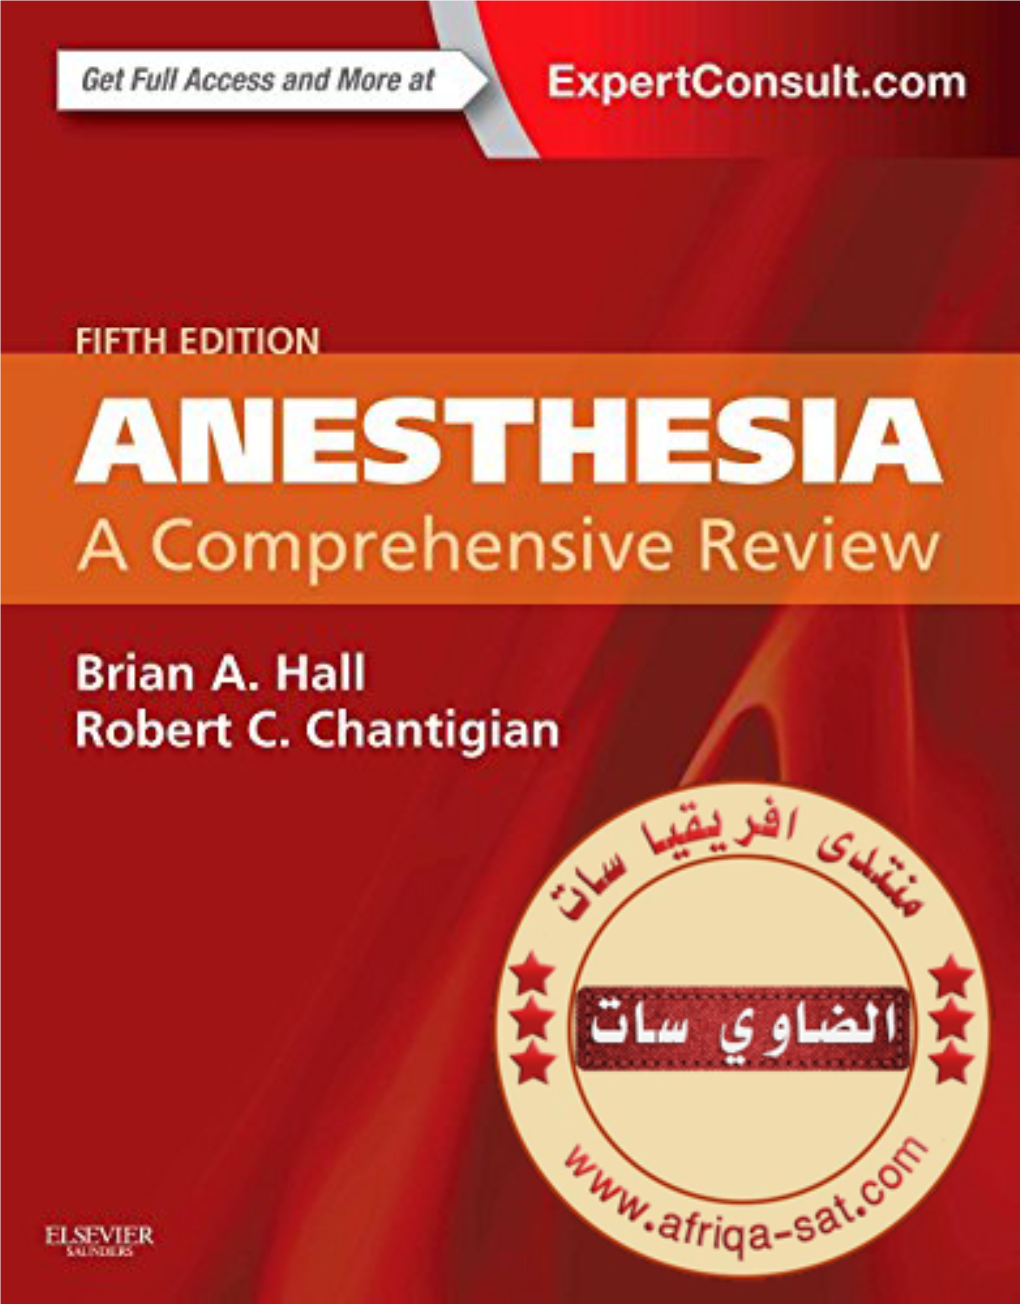 ANESTHESIA a Comprehensive Review